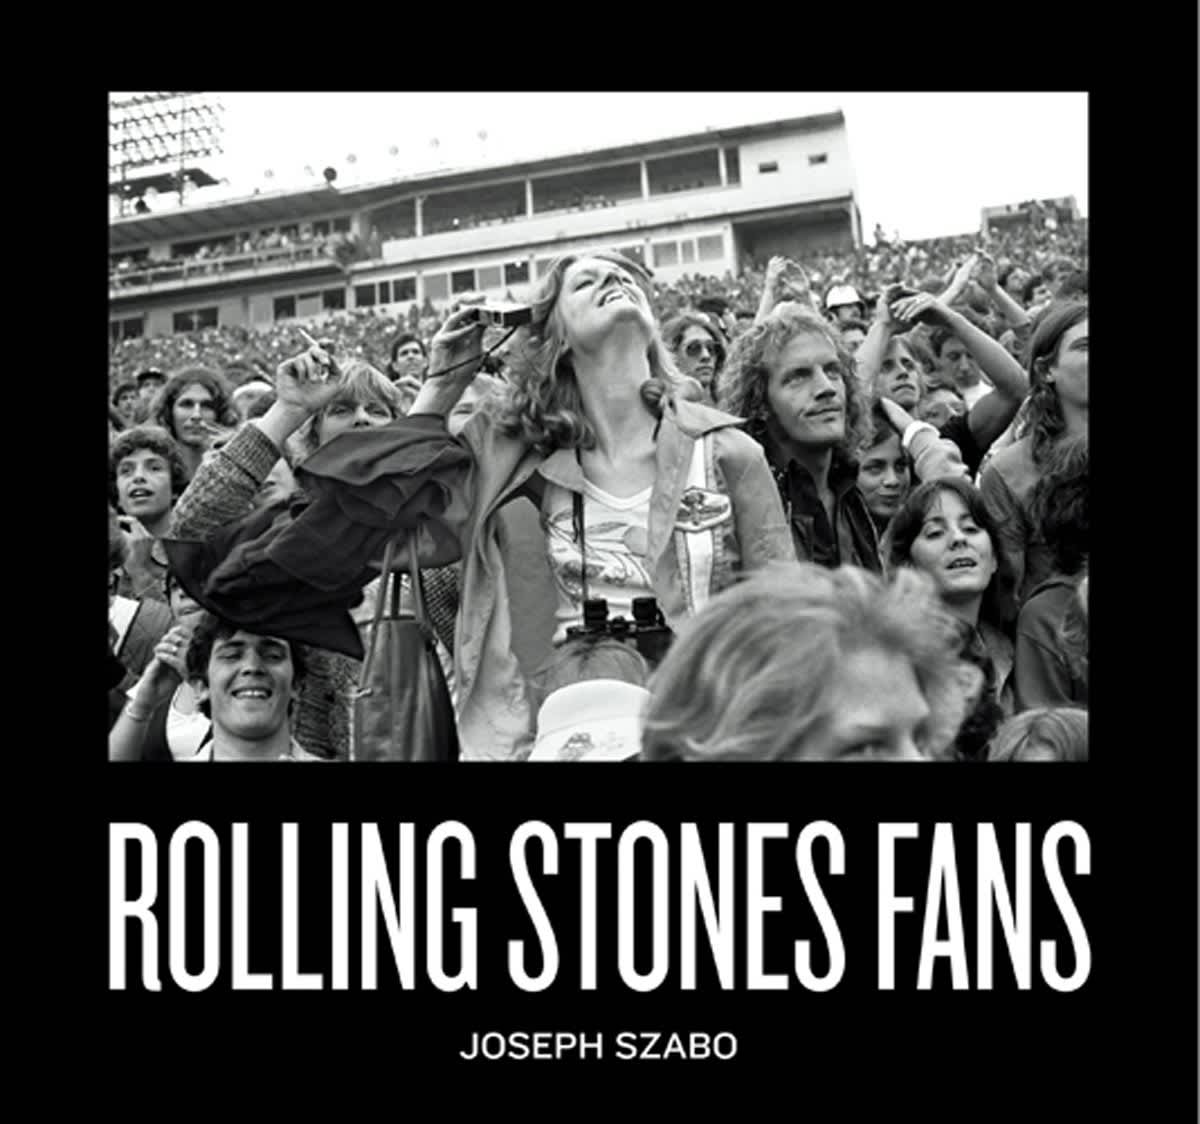 Rolling Stones Fans